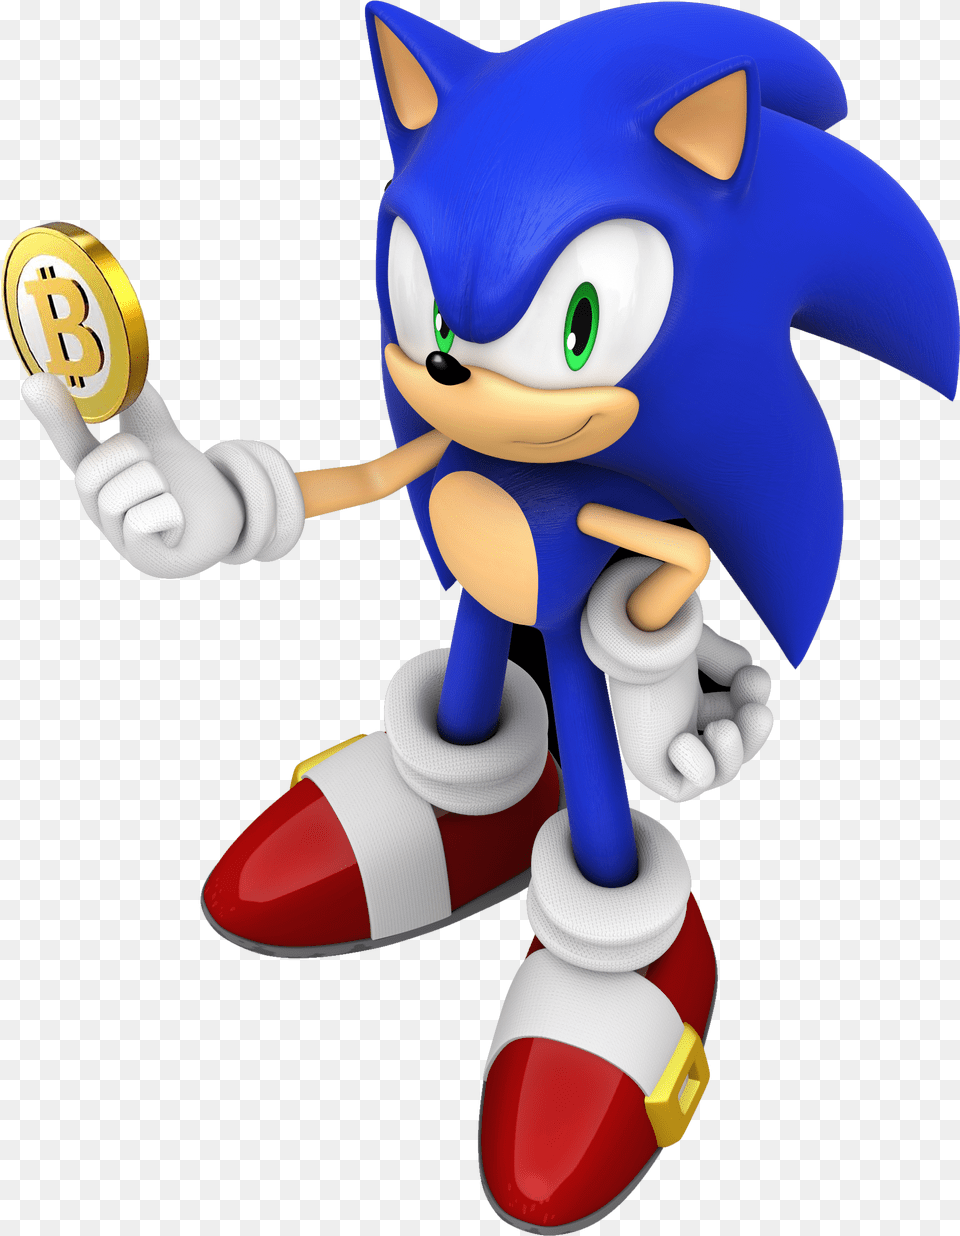 Sonic The Hedgehog Render Download, Toy Png Image